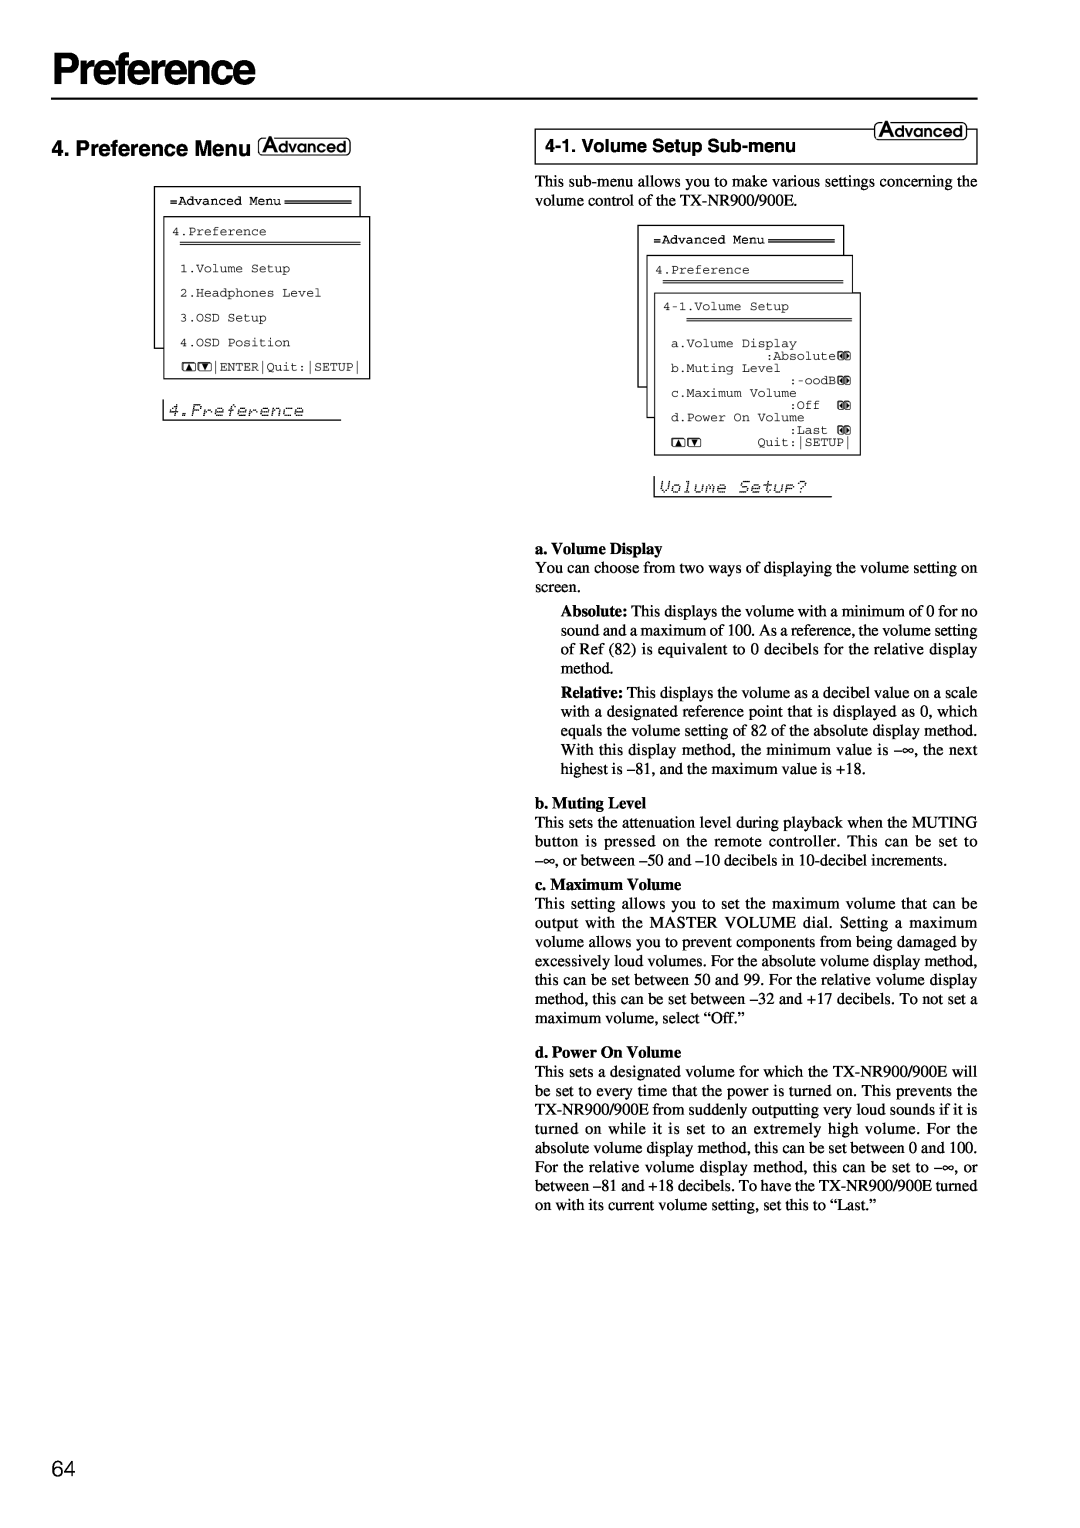 Onkyo TX-NR900E instruction manual Preference Menu, Volume Setup Sub-menu 